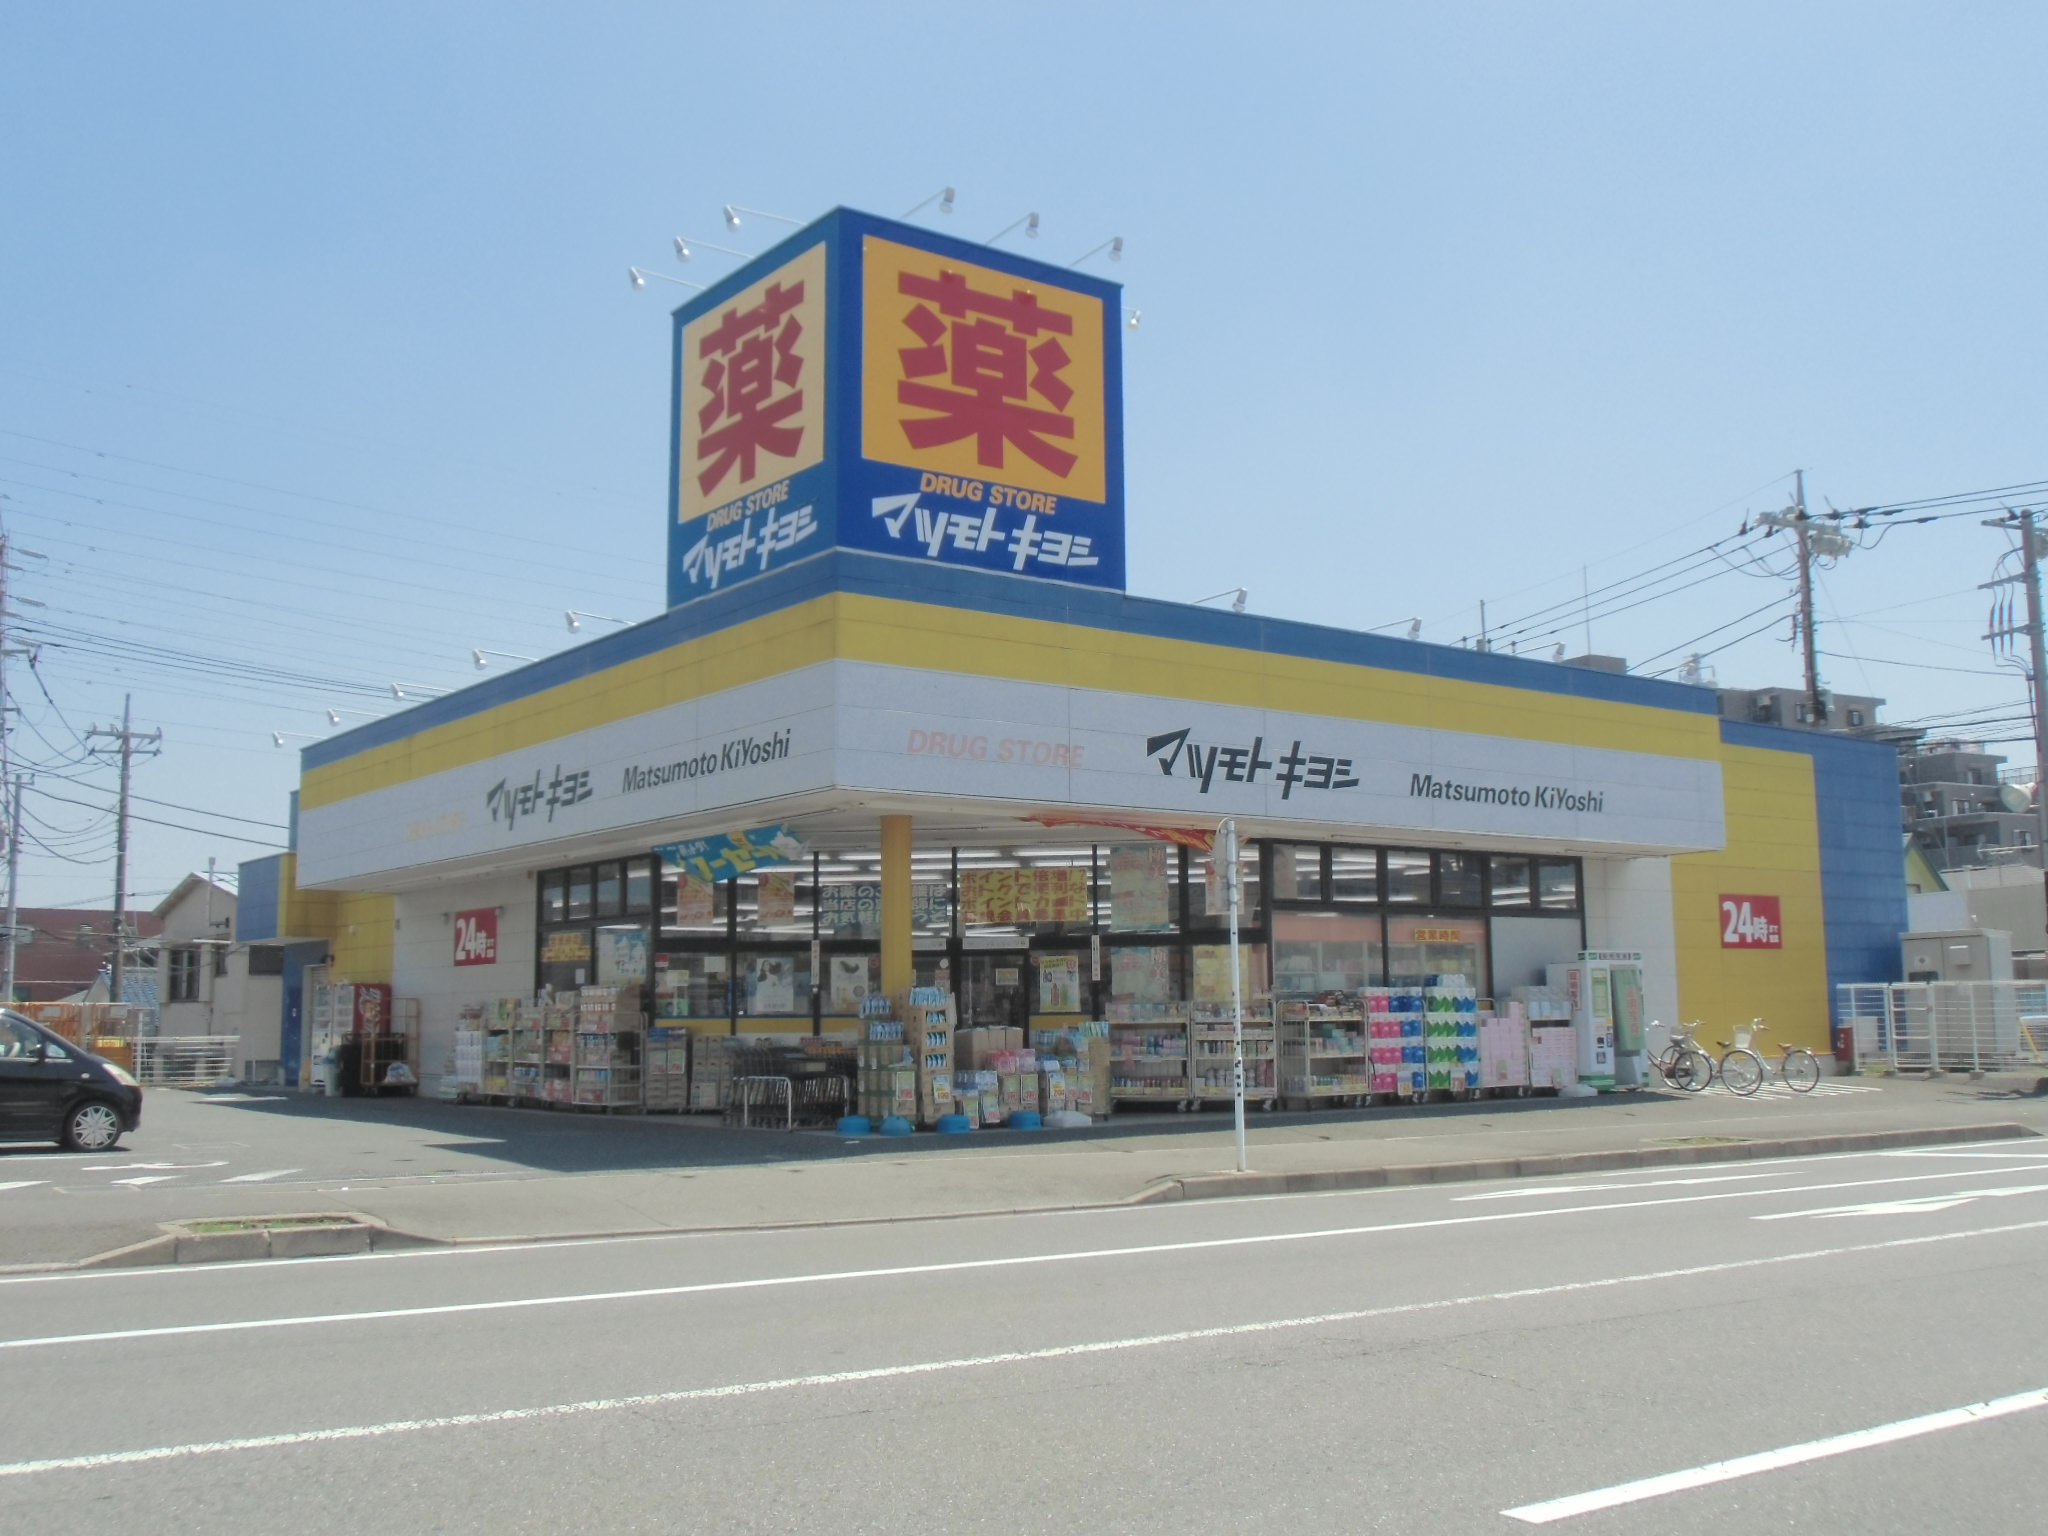 Dorakkusutoa. Drugstore Matsumotokiyoshi new Toga shop 541m until (drugstore)